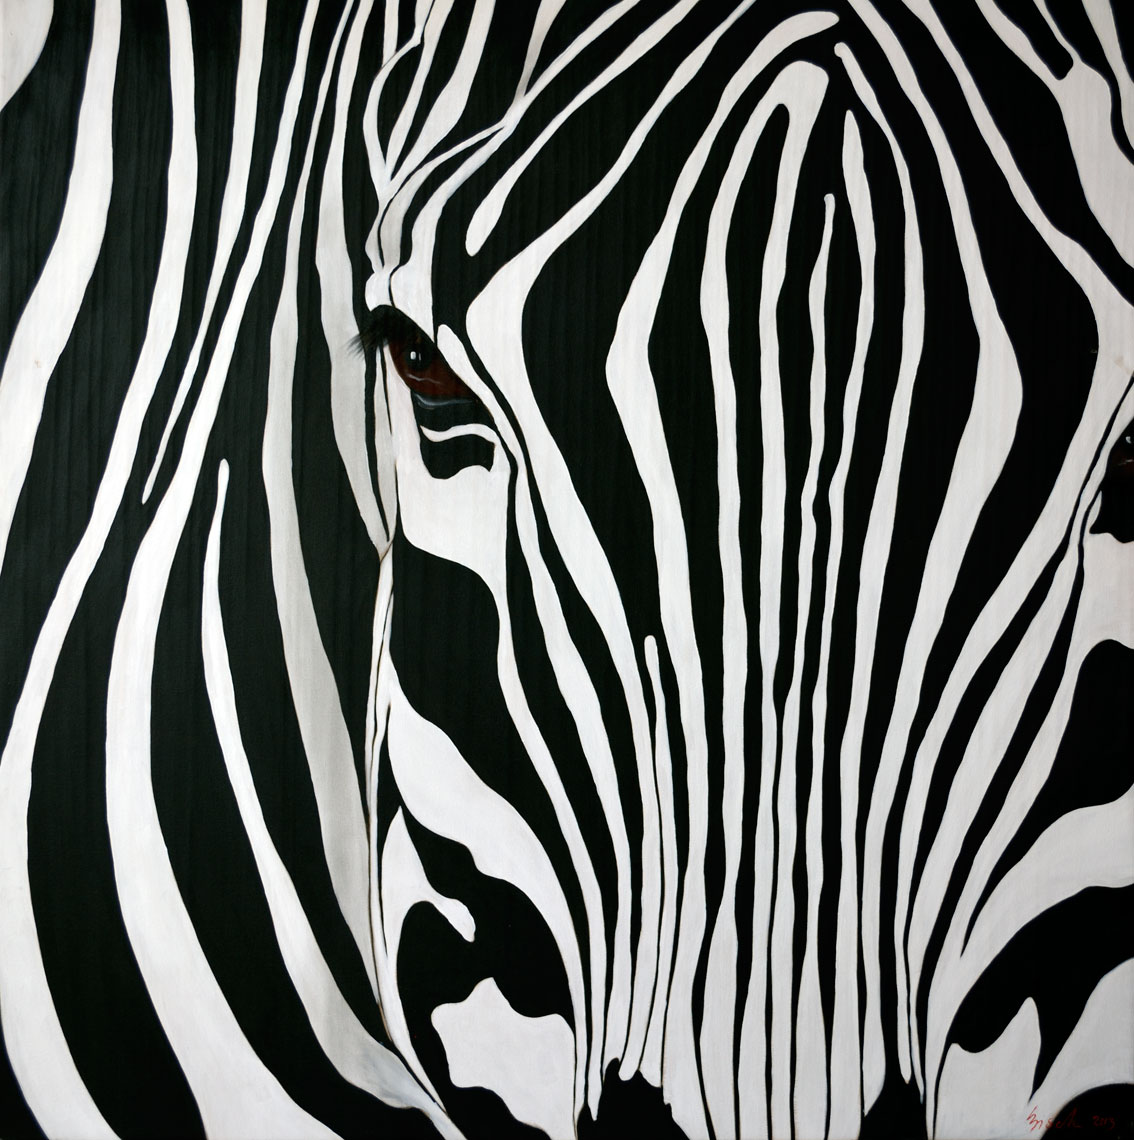 ZEBRA CLOSE UP  Thierry Bisch Contemporary painter animals painting art decoration nature biodiversity conservation